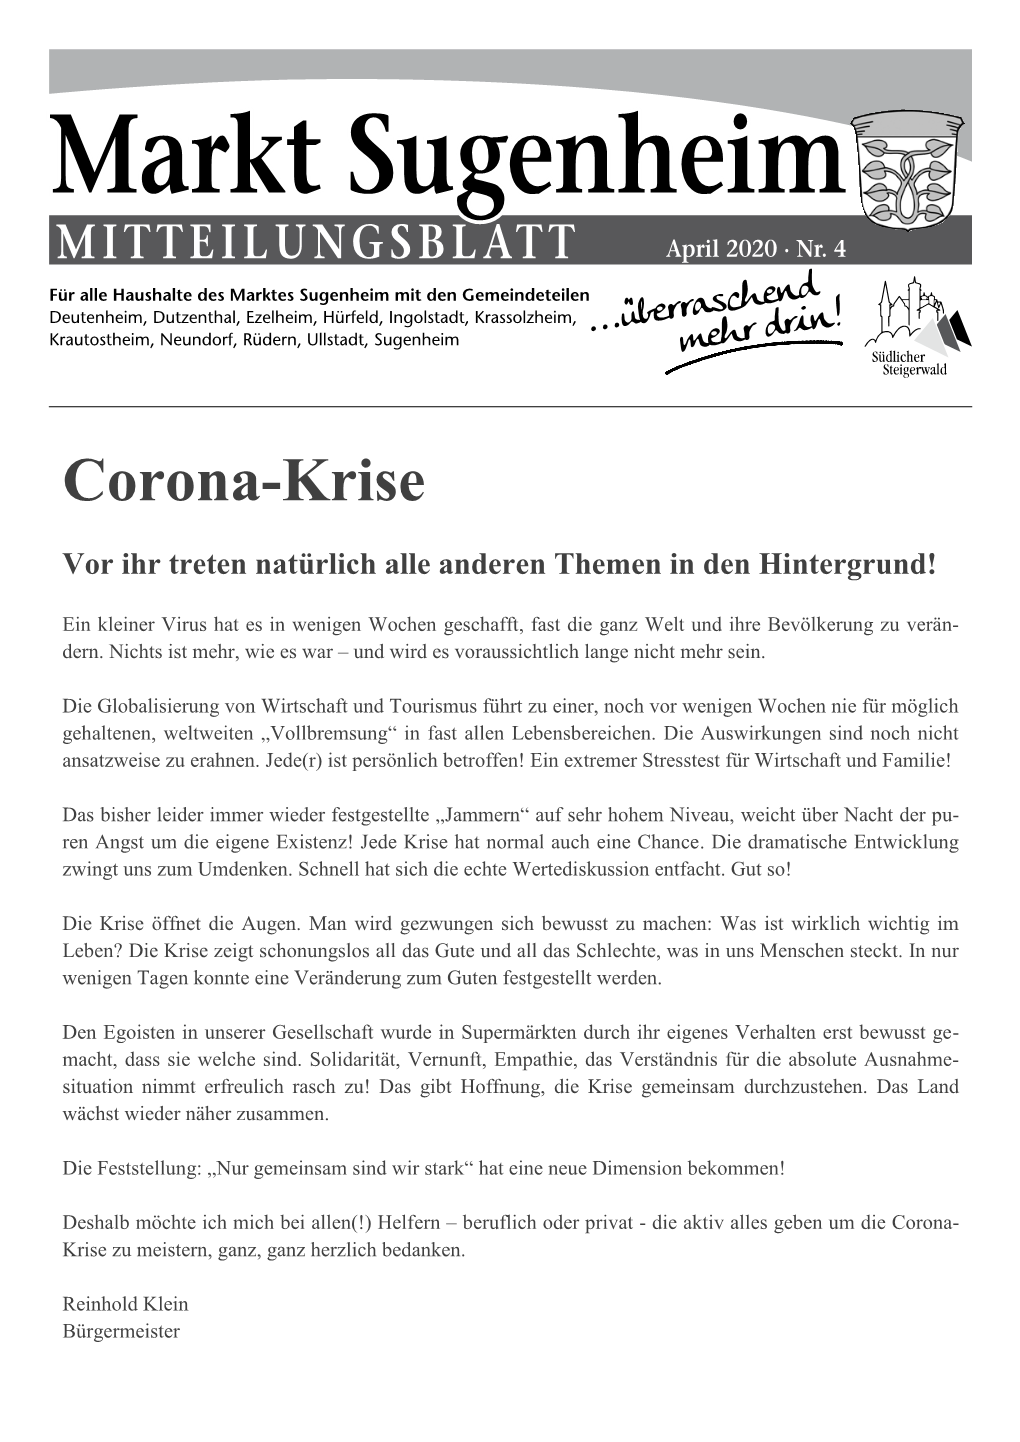 Mitteilungsblatt Nr. 04/2020